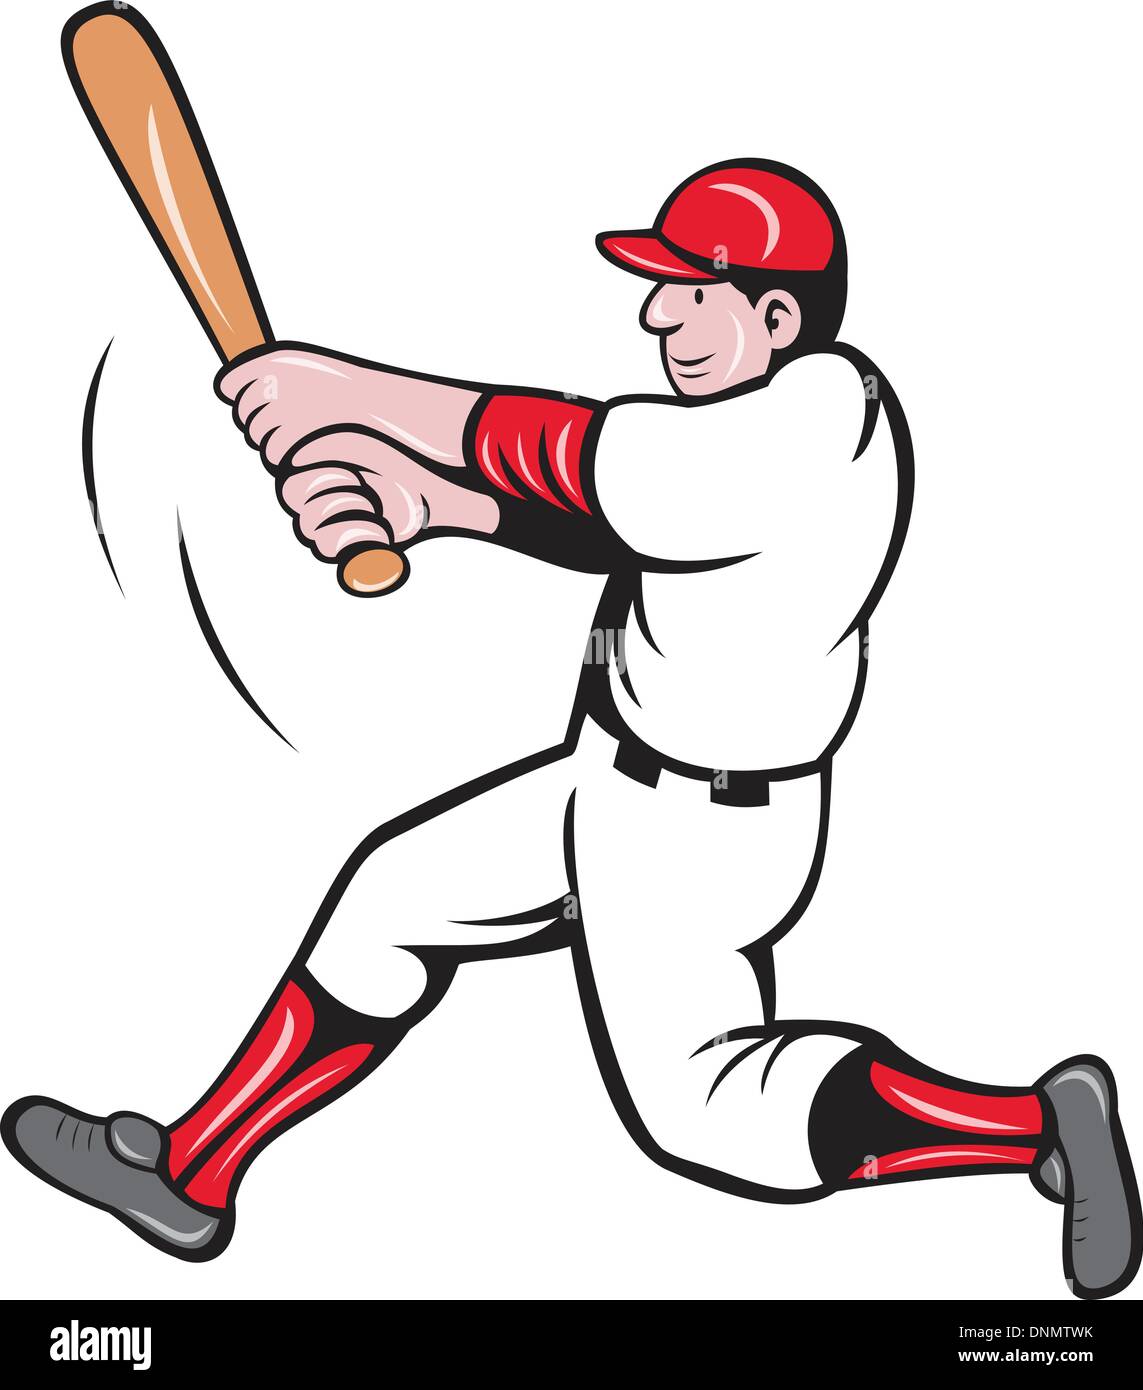 illustration of a baseball player batting cartoon style isolated